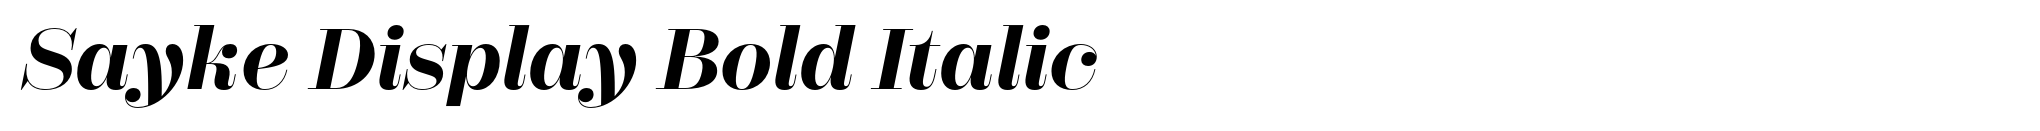 Sayke Display Bold Italic image